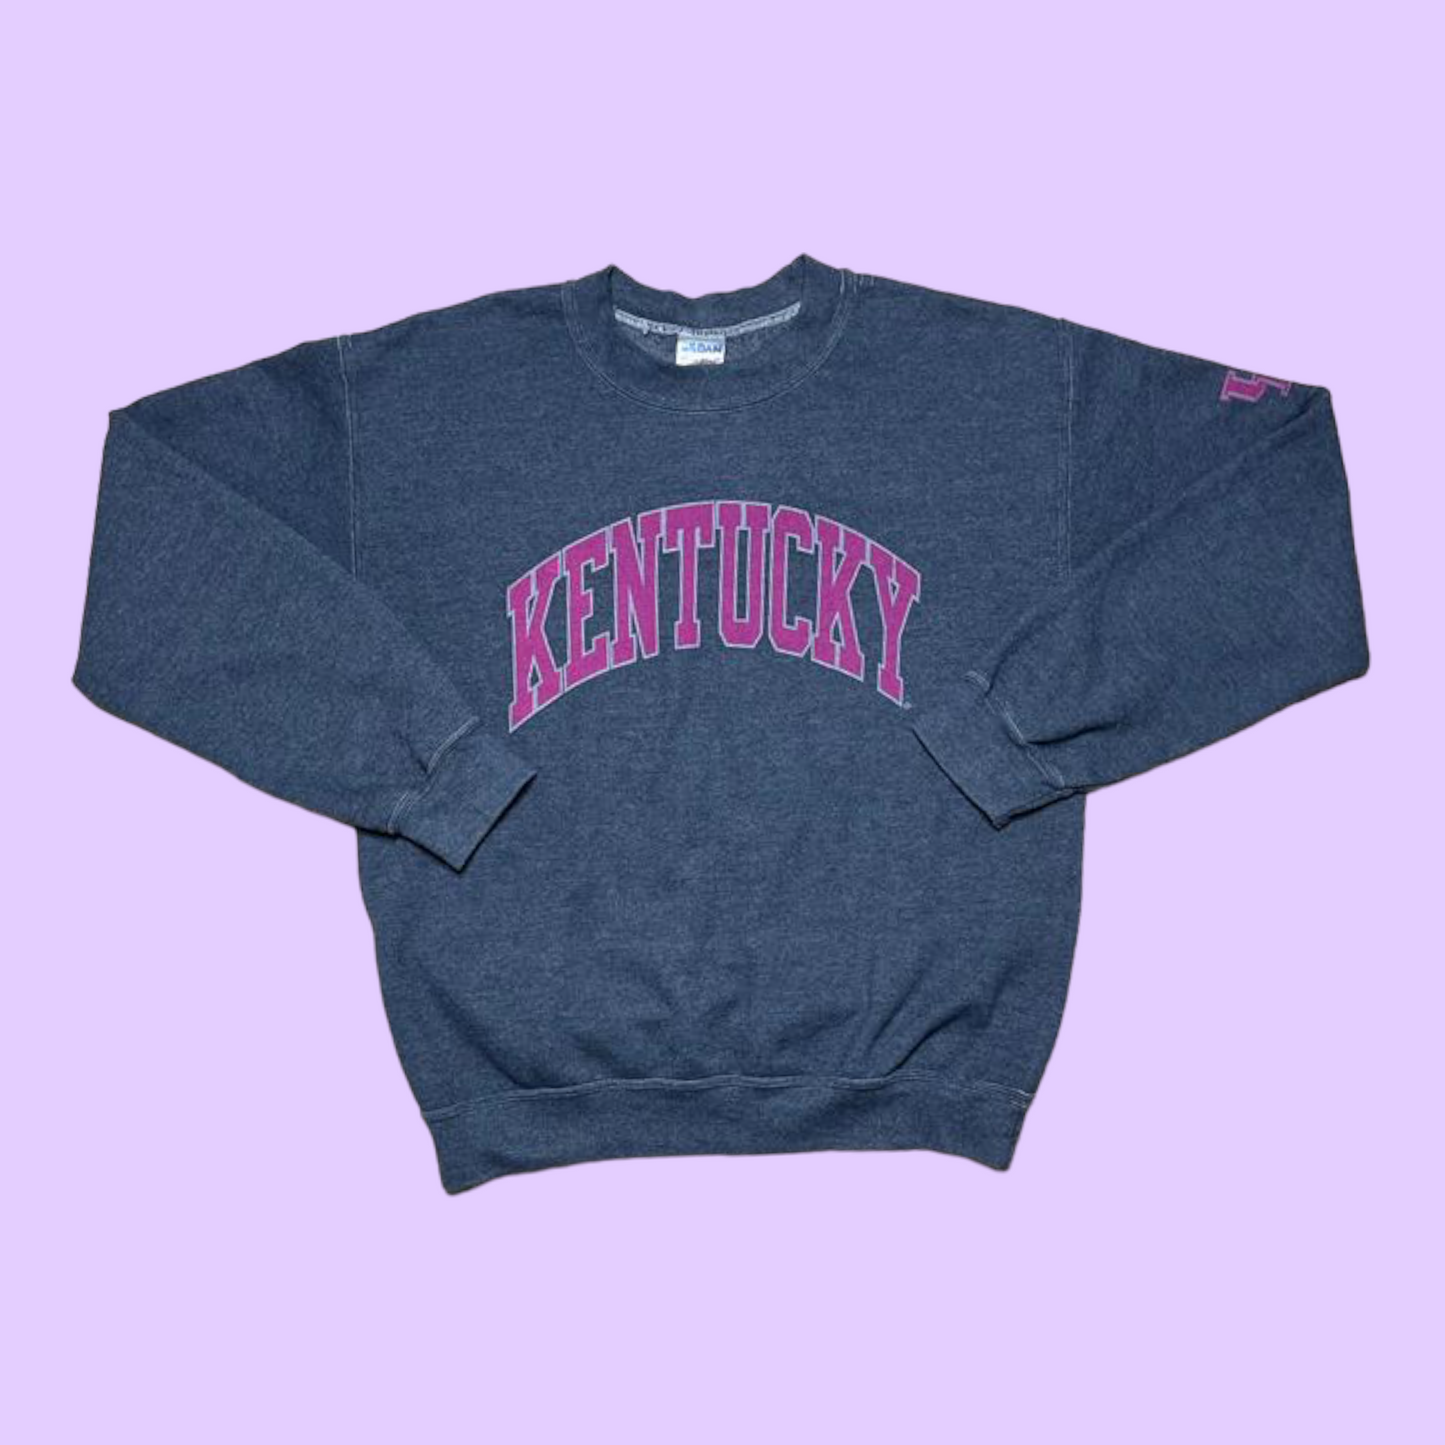 Vintage Kentucky sweater - S